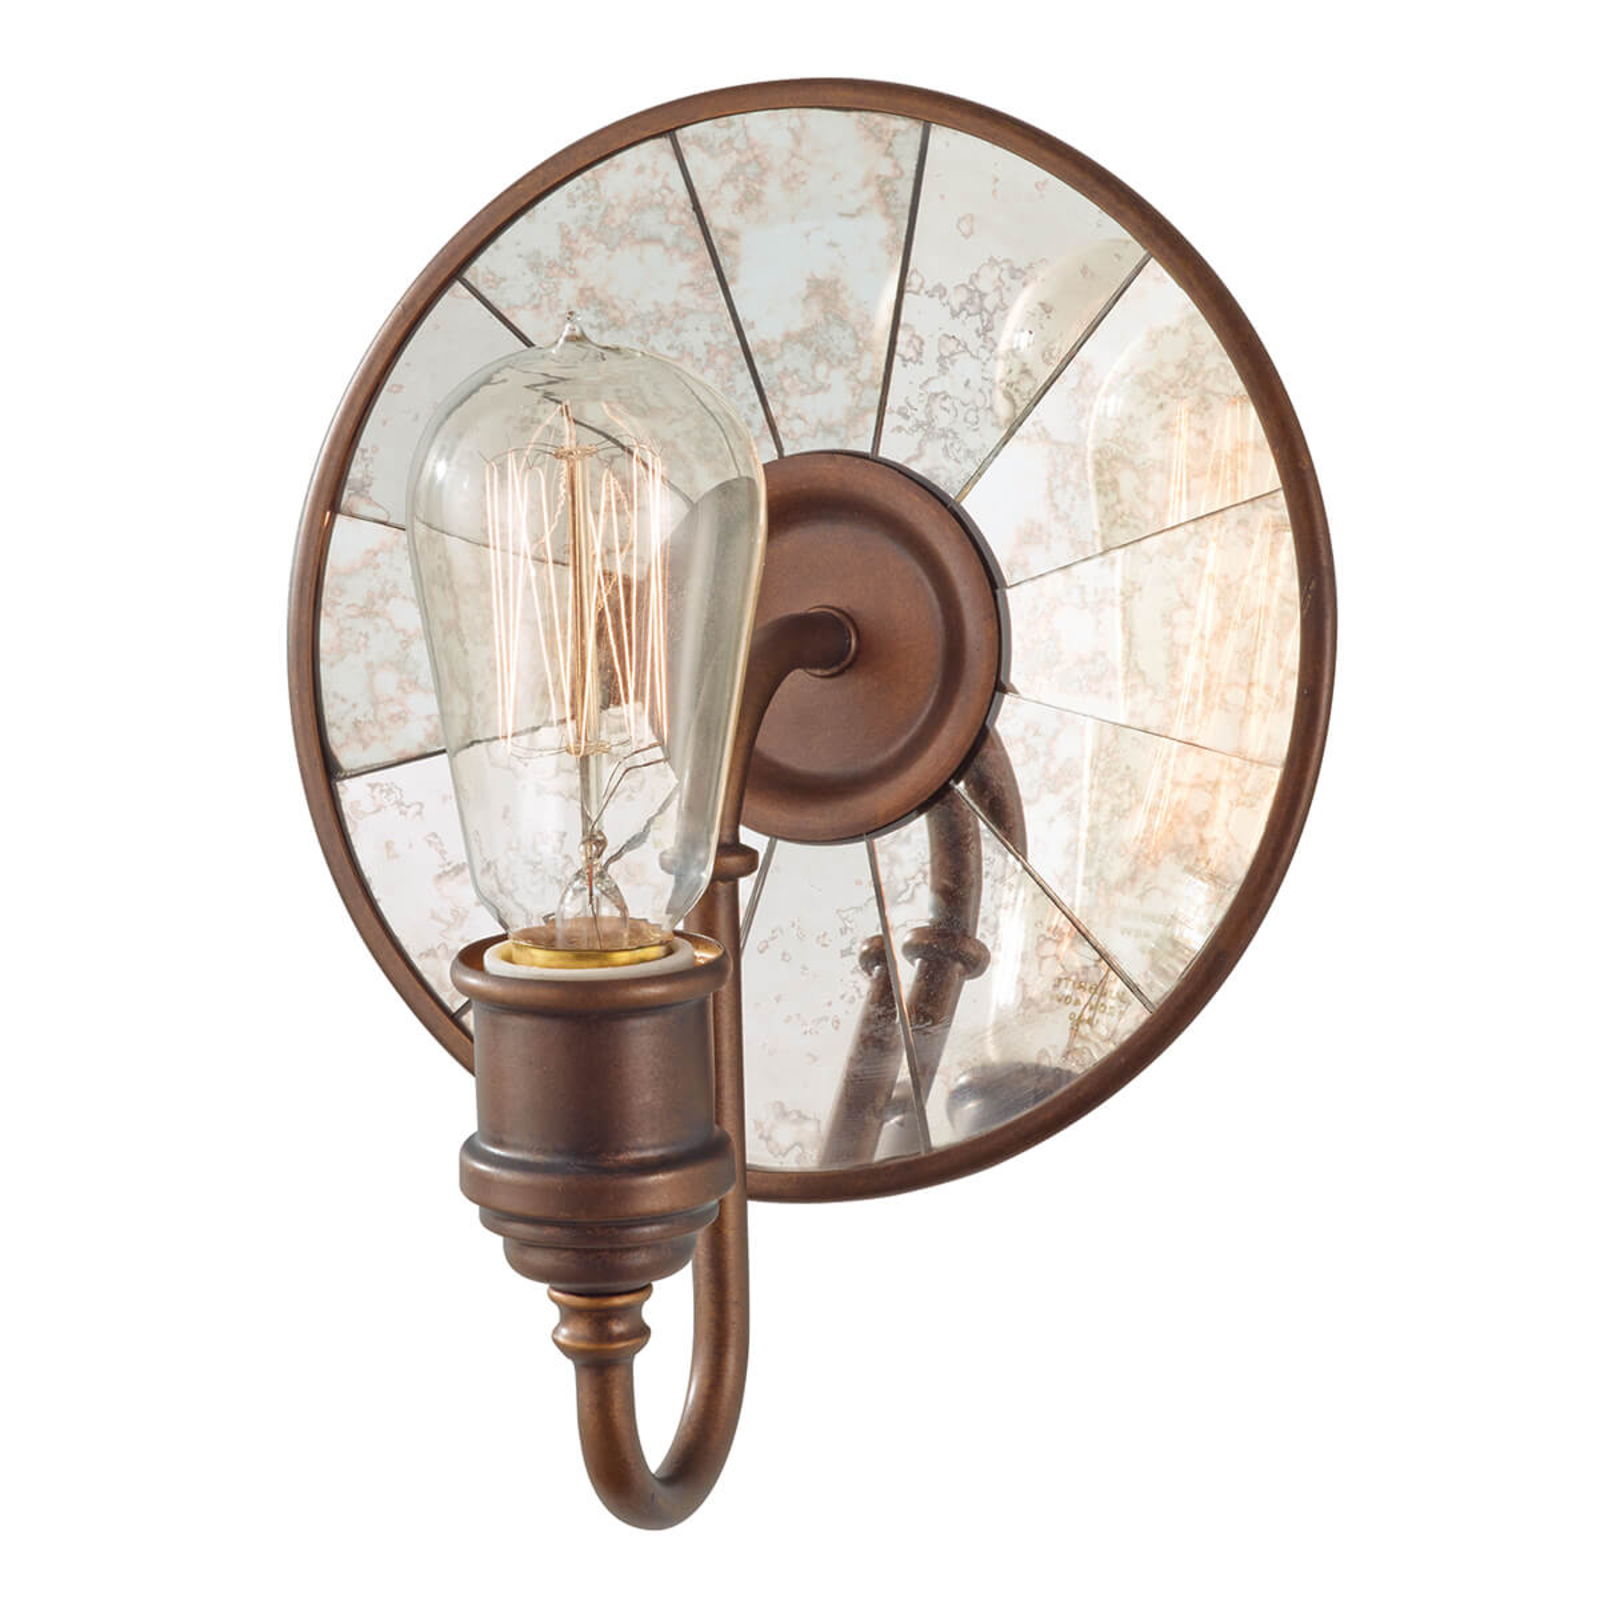 Vegglampe Urban Renewal med speilglass i bronse